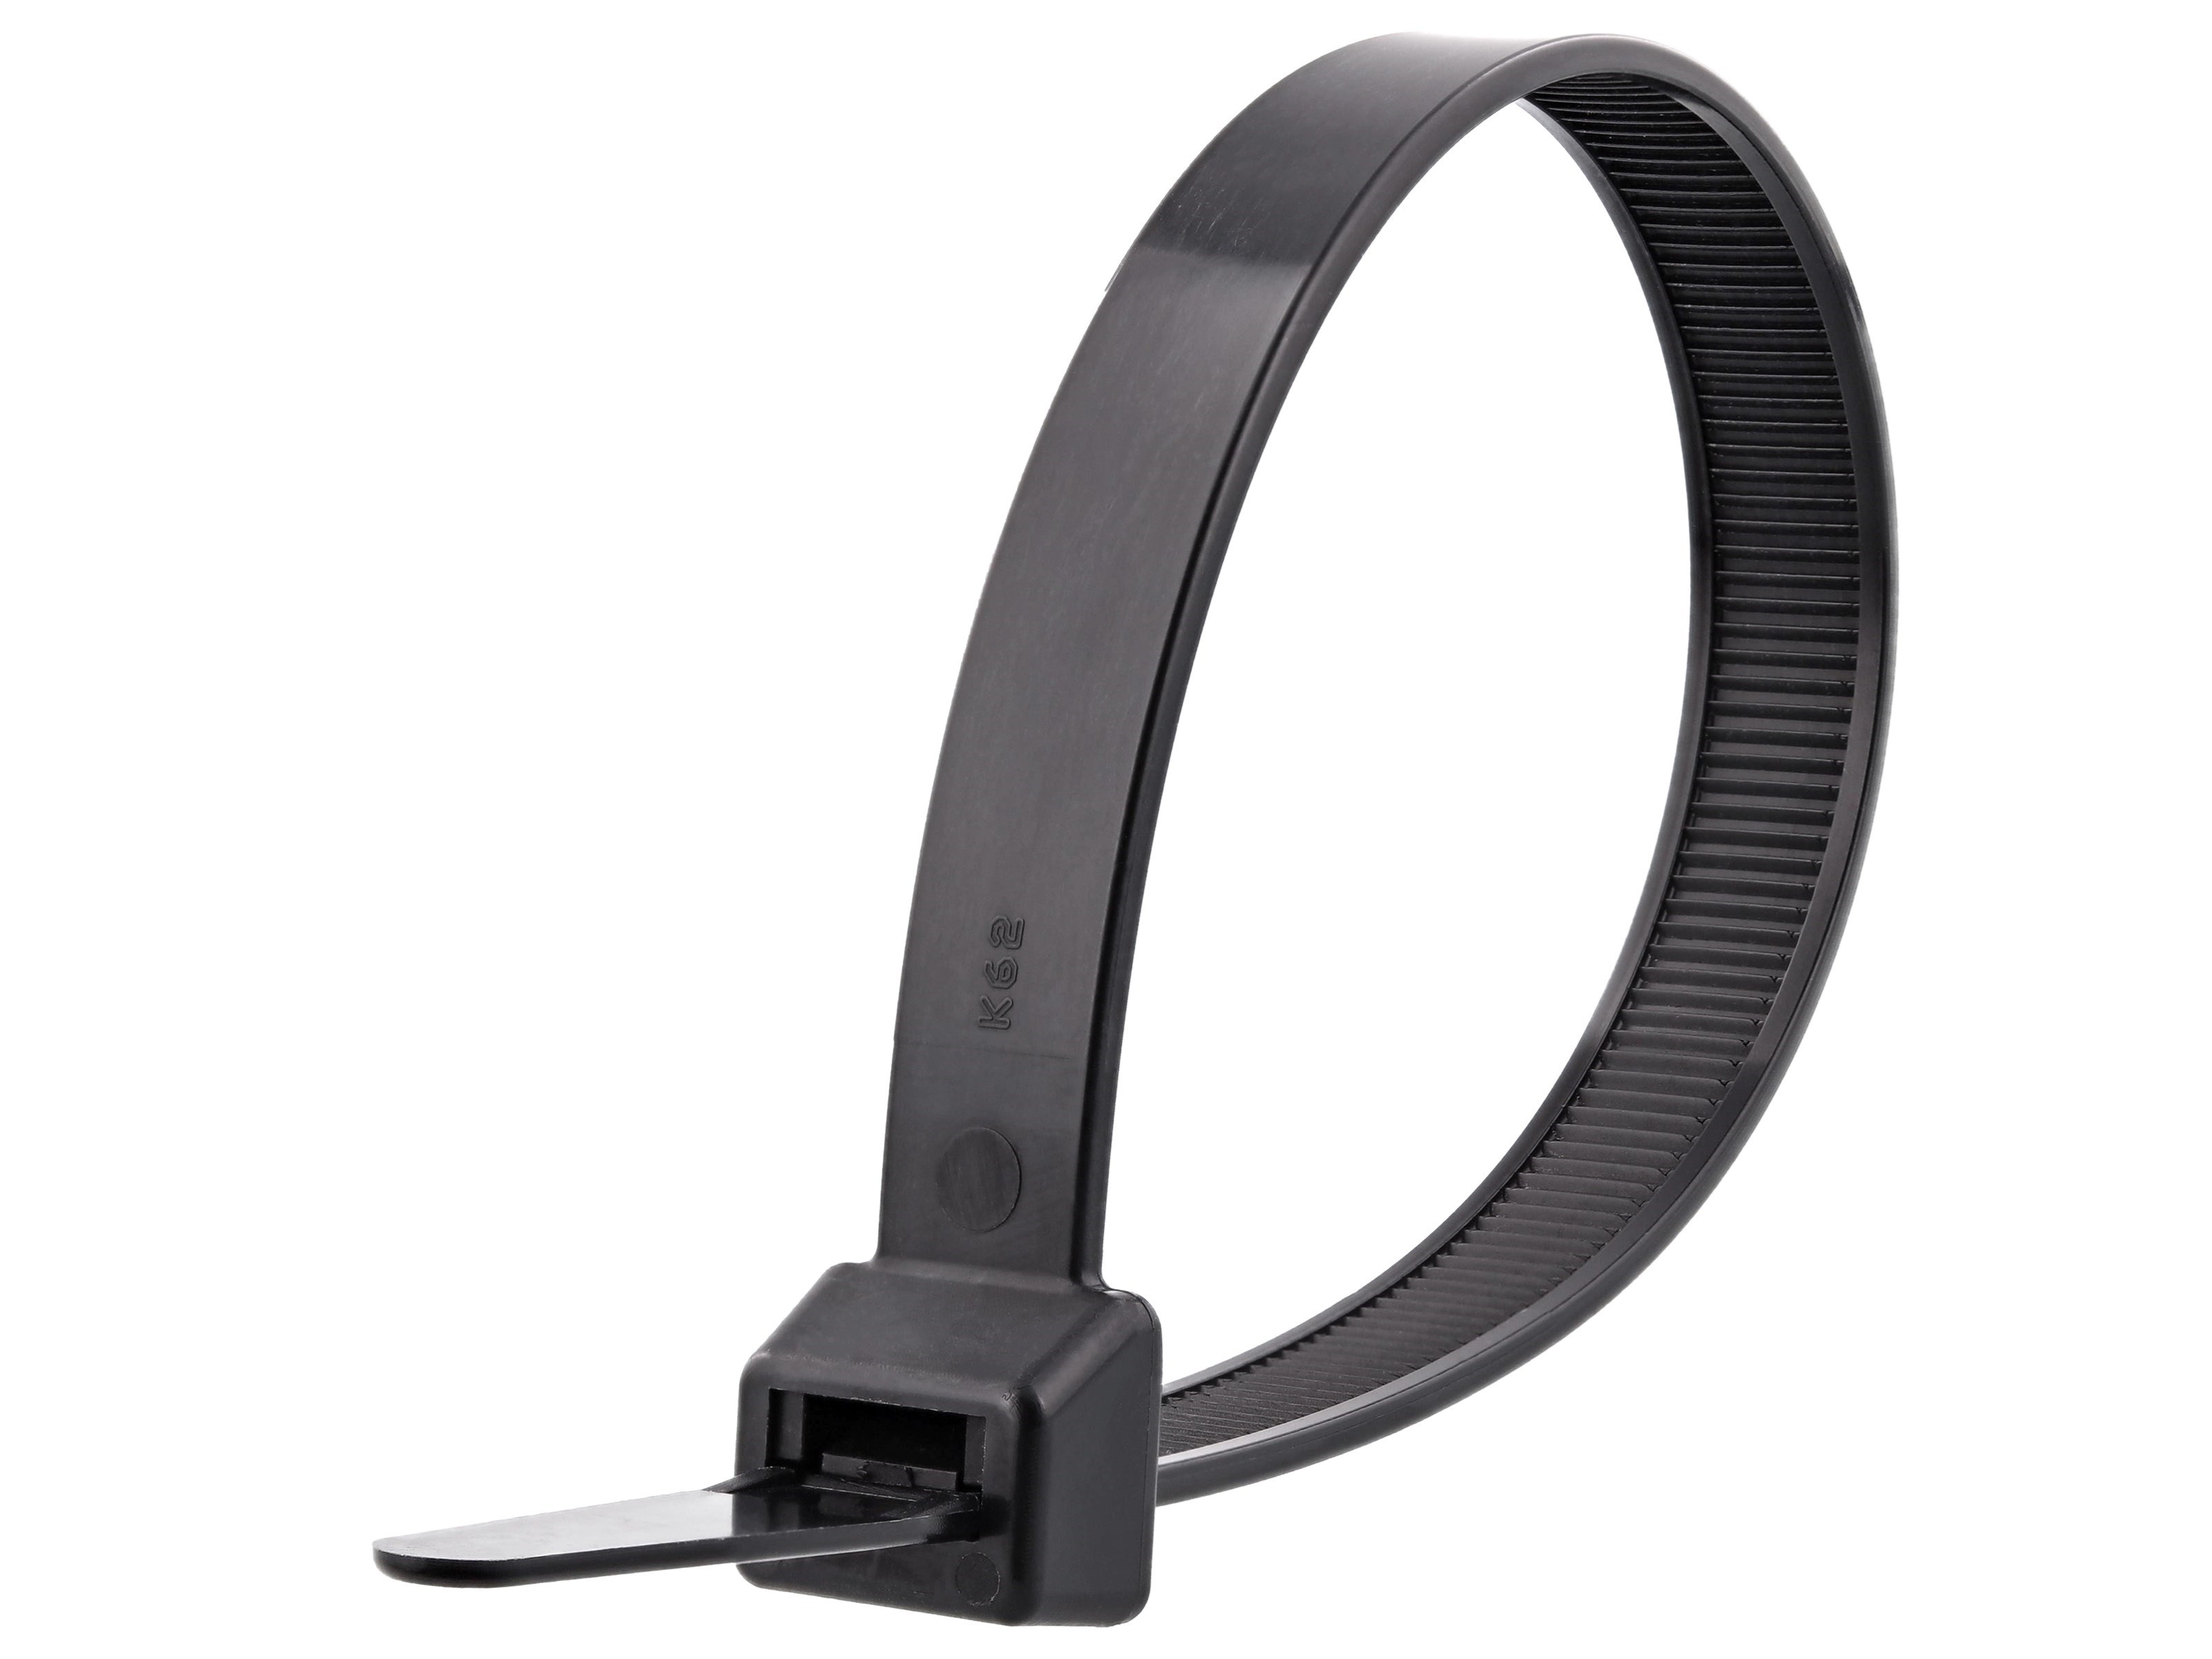 Cable Ties 11" x 3 mm Heavy Duty Black Zip Ties 